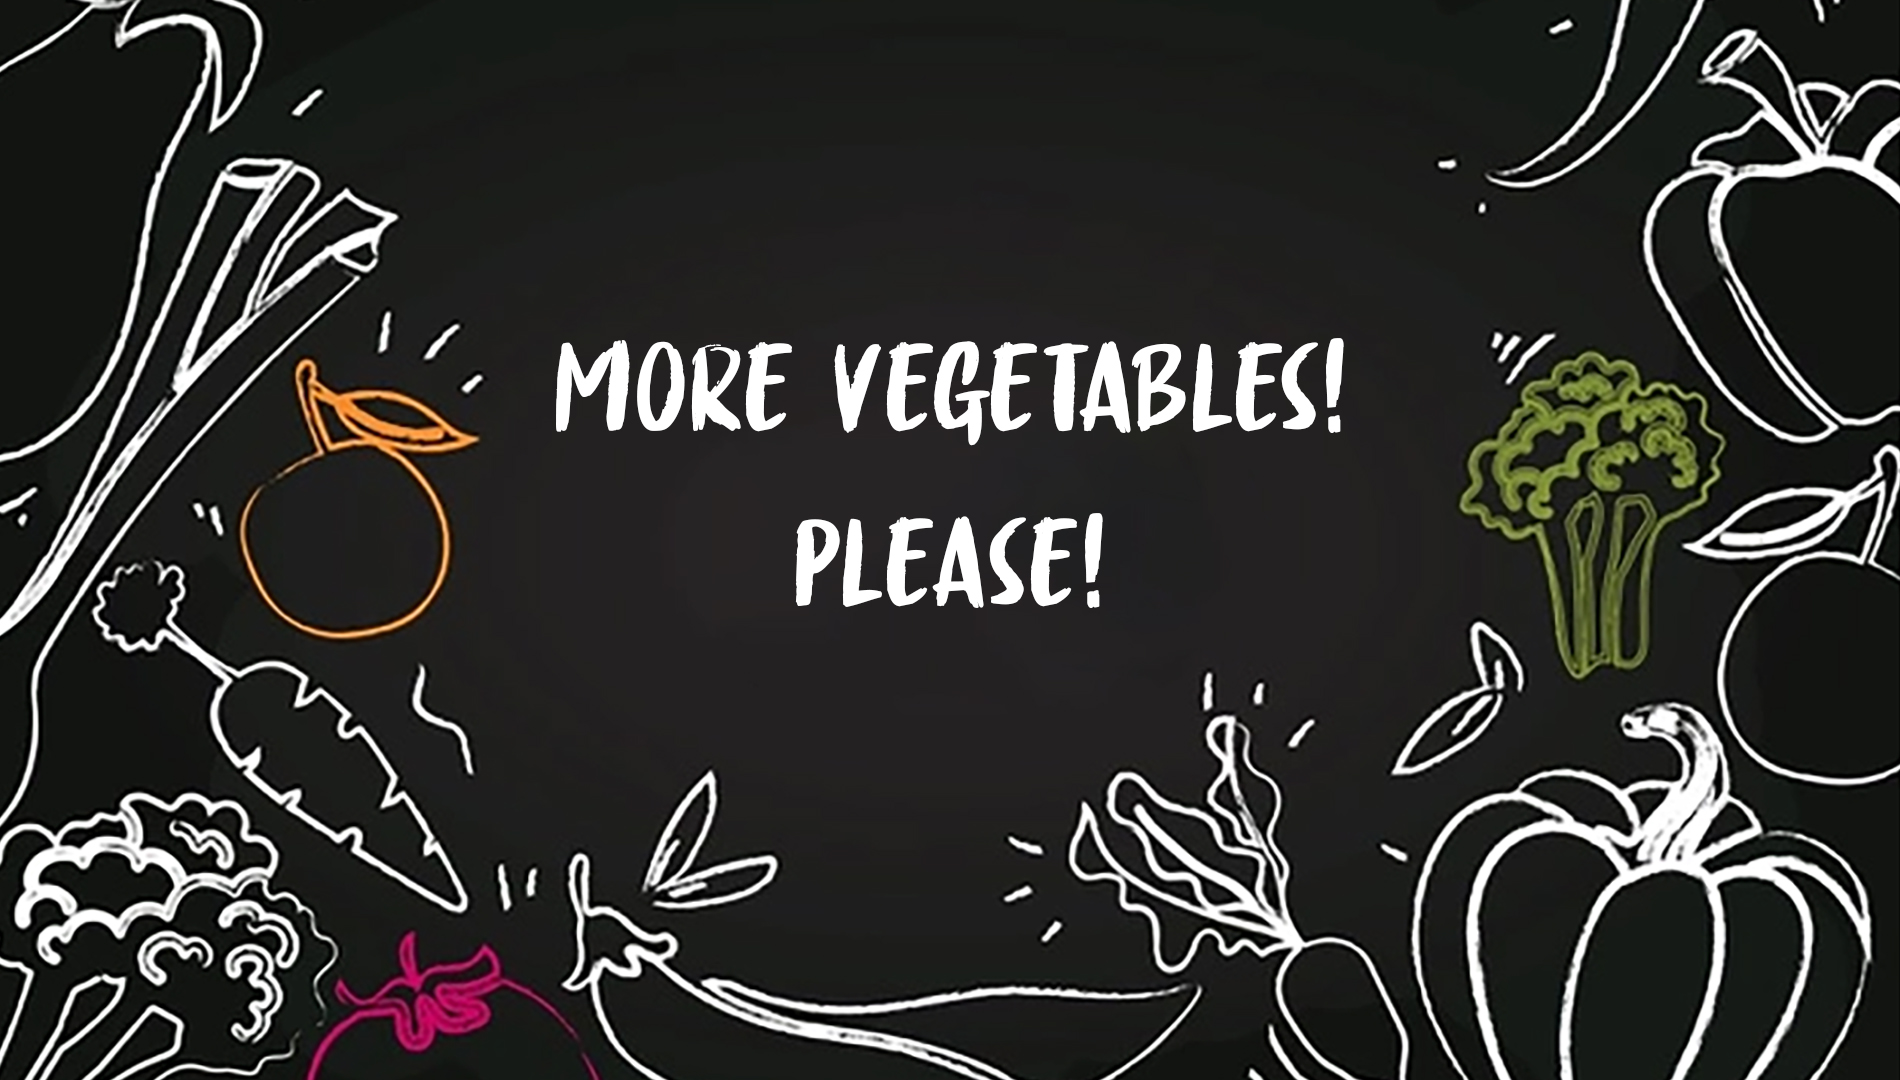 More Vegetables Please!